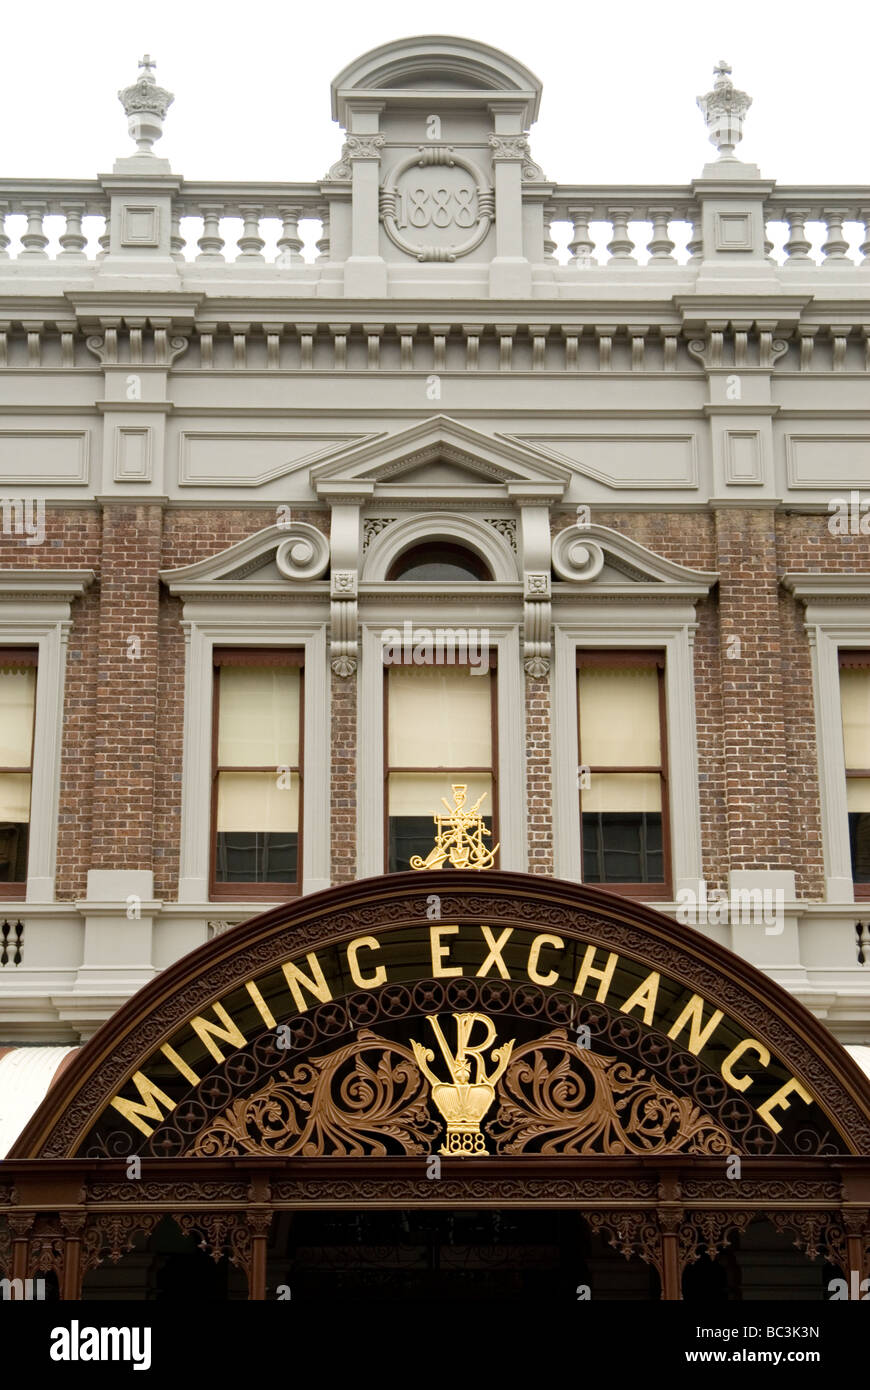 Mining Exchange building in Ballarat, Victoria, Australia Stock Photo